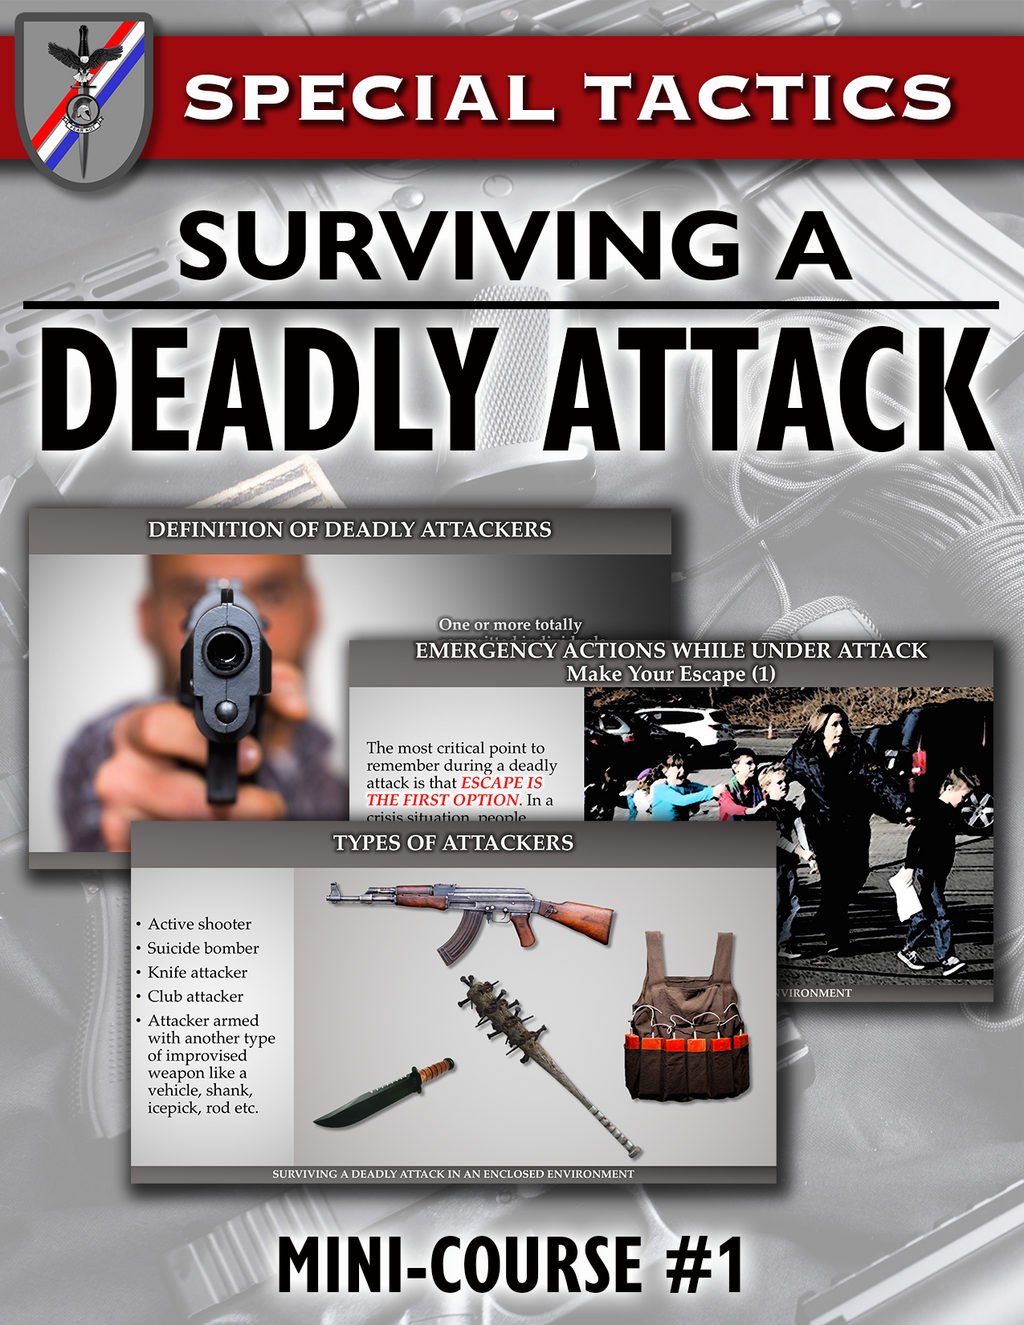 Mini-Course #1 - Surviving a Deadly Attack